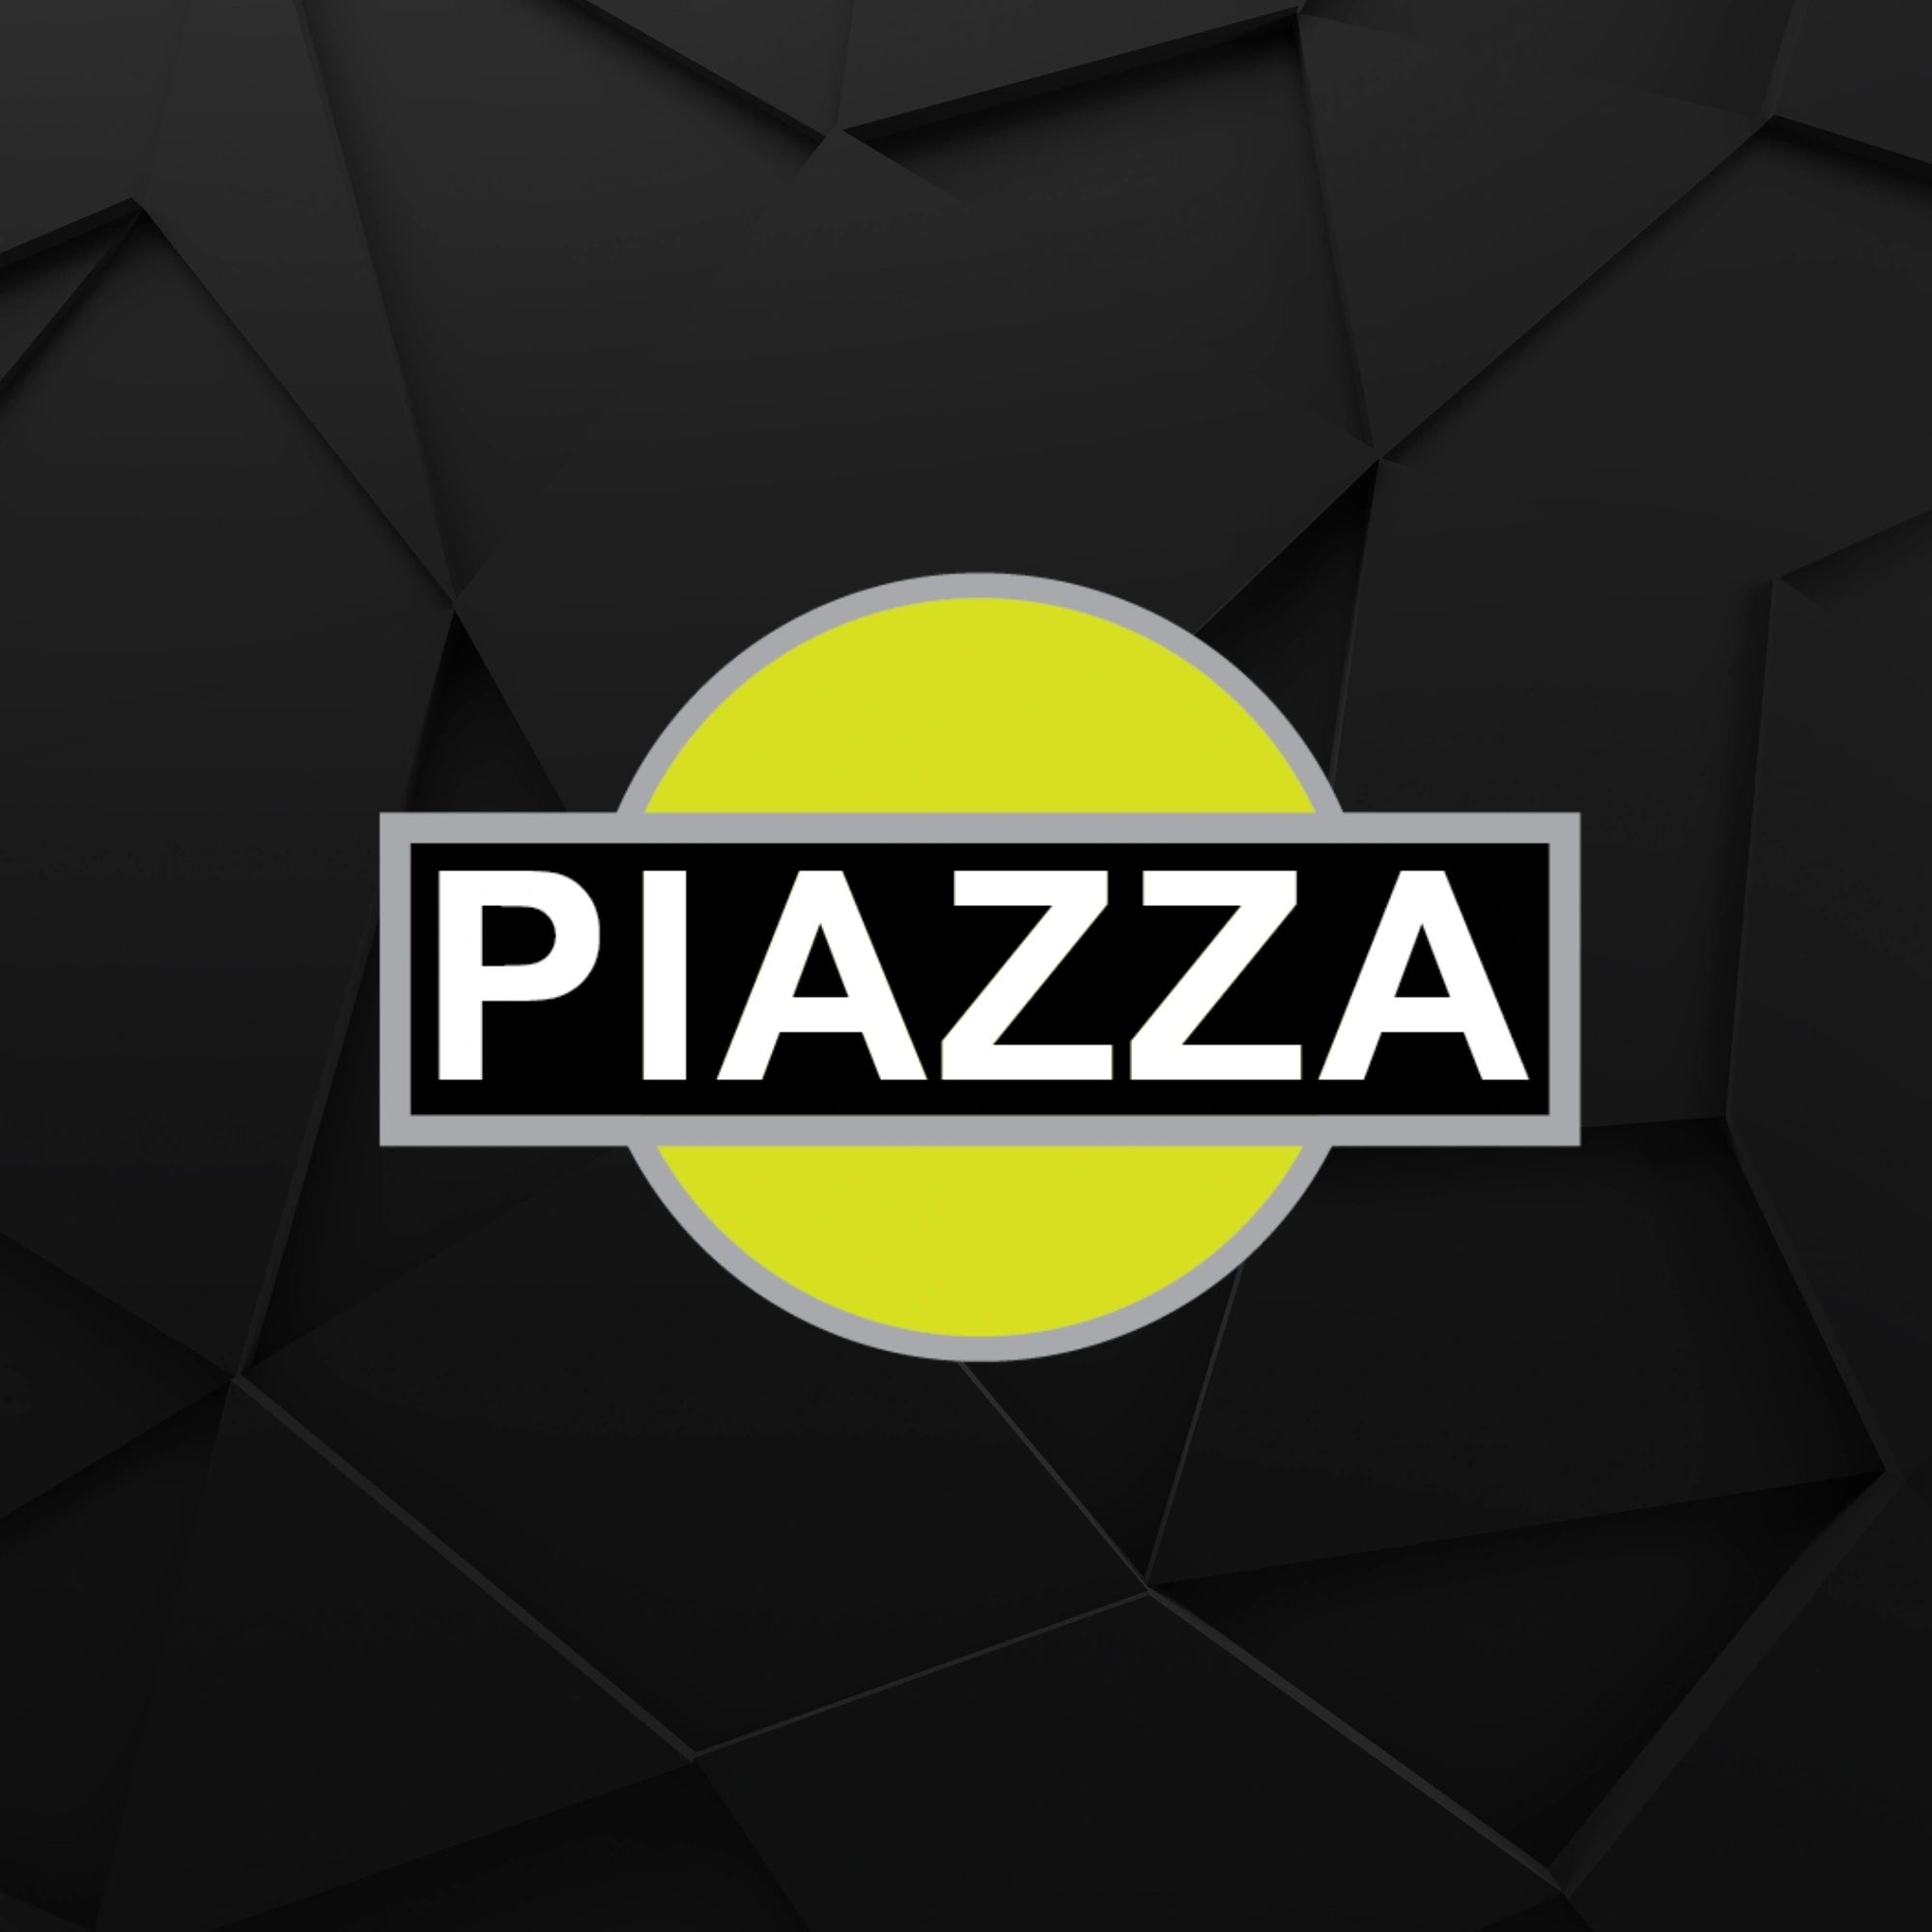 Piazza Logo on an EDGE background, black